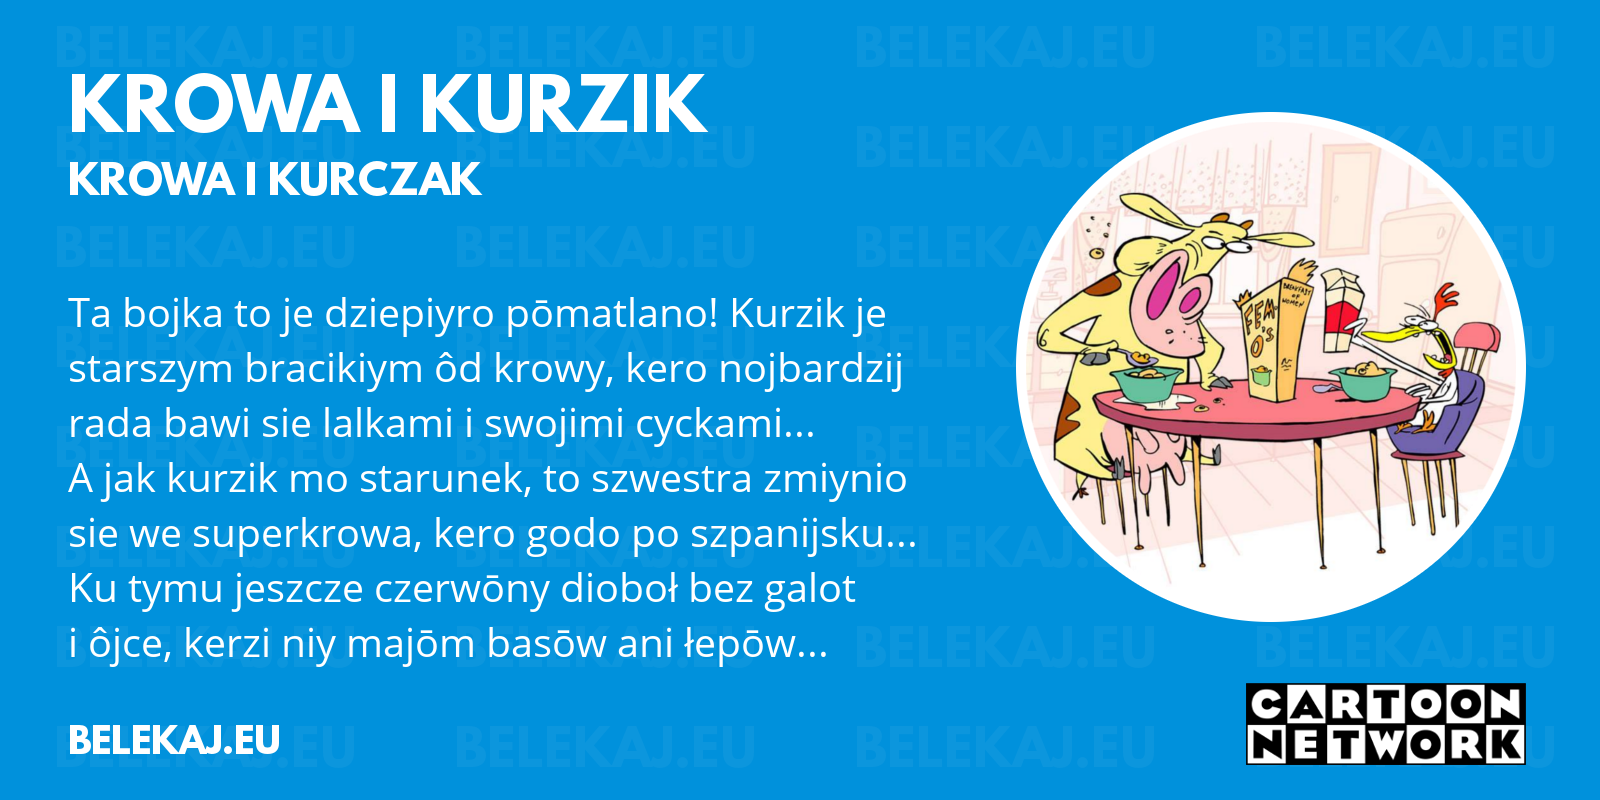 Krowa i Kurczak, Cartoon Network po śląsku - blog bele kaj